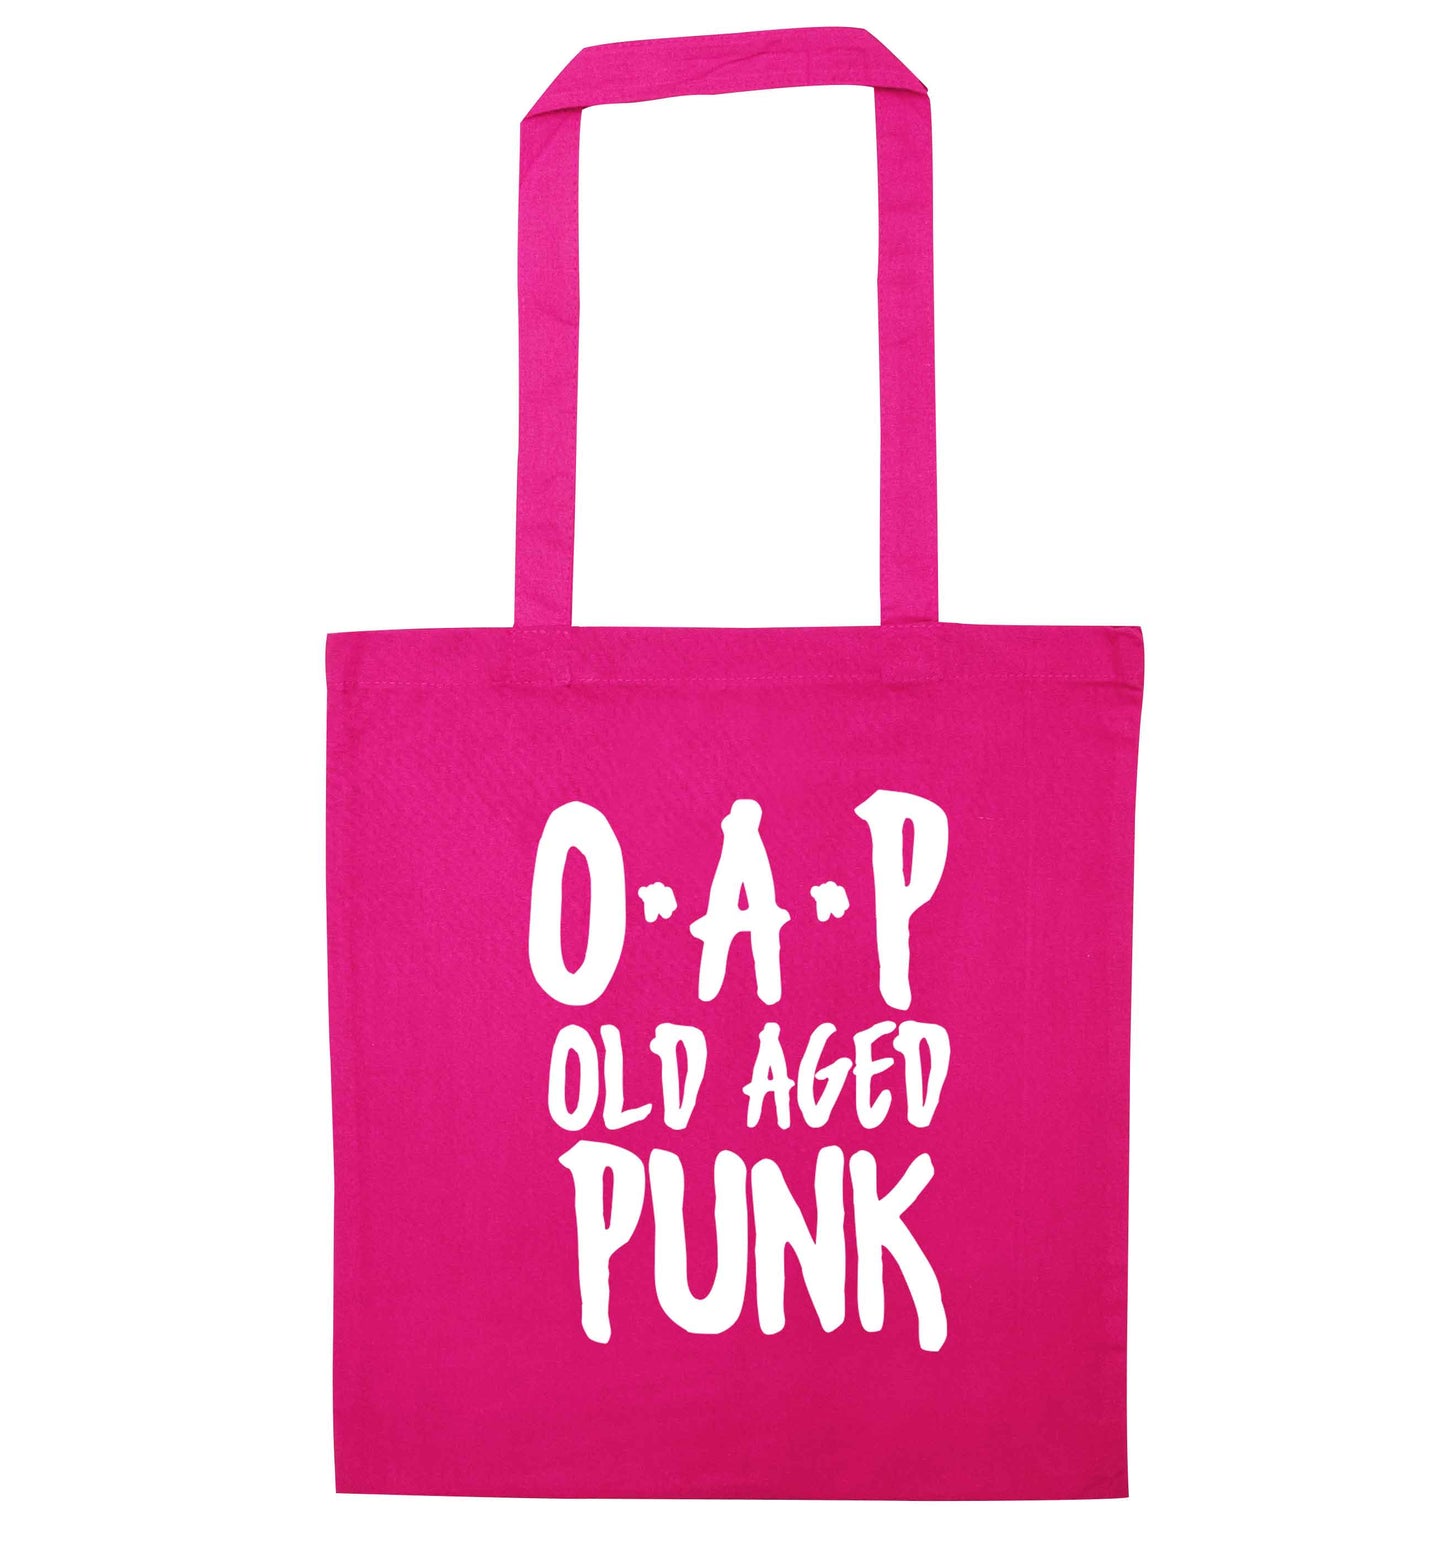 O.A.P Old Age Punk pink tote bag